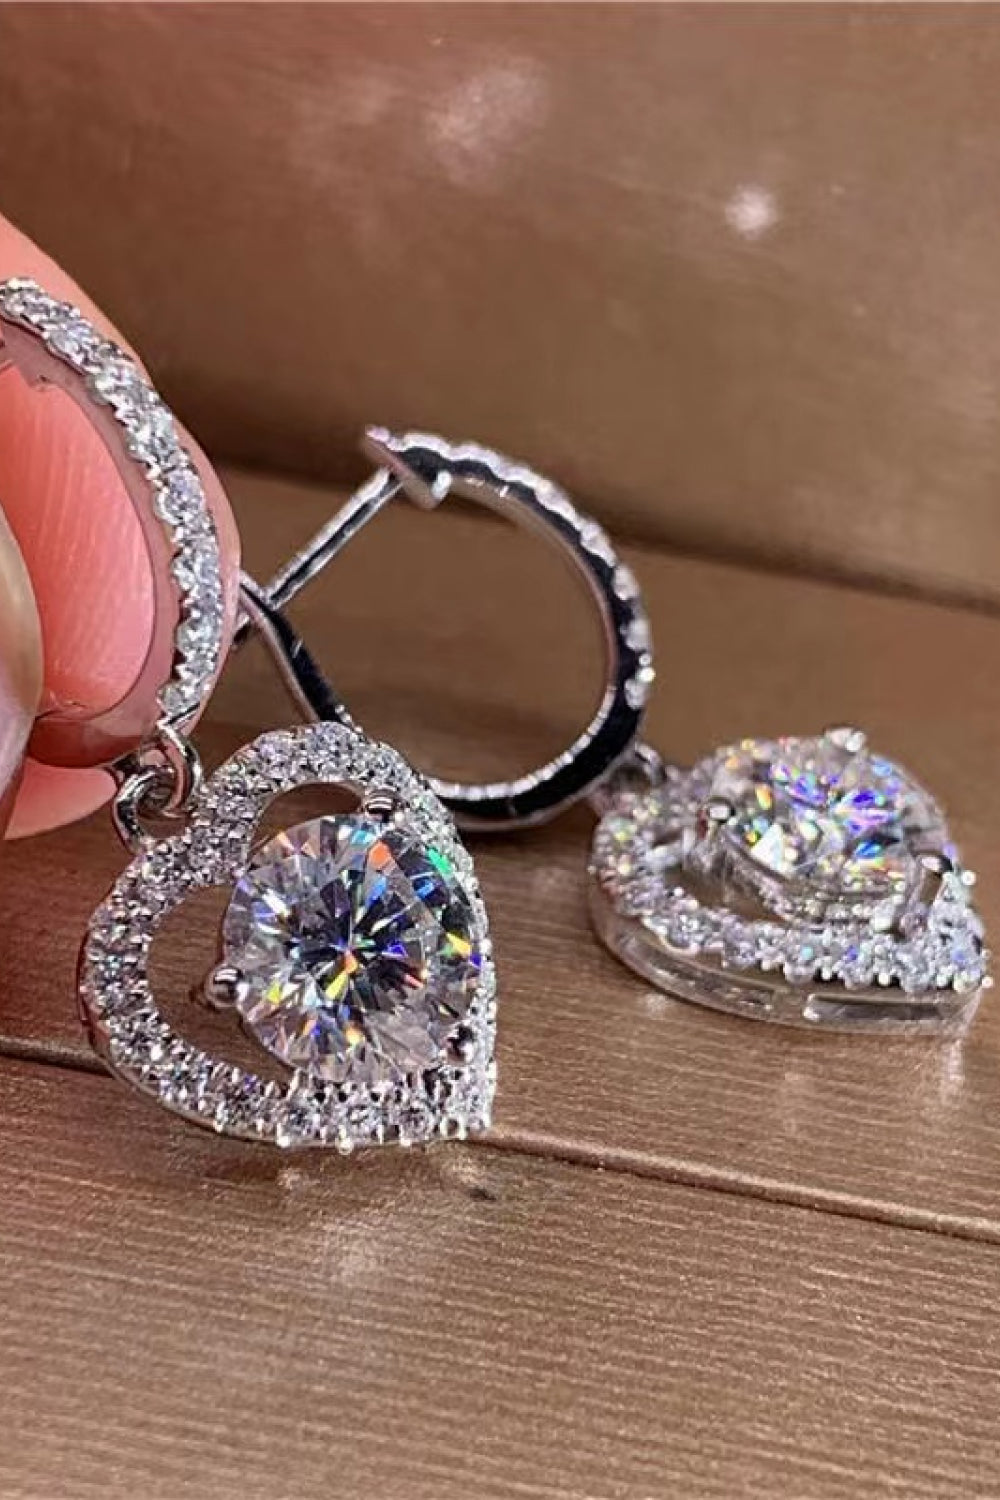 Jewelry 2 Carat Moissanite Platinum-Plated Heart Drop Earrings